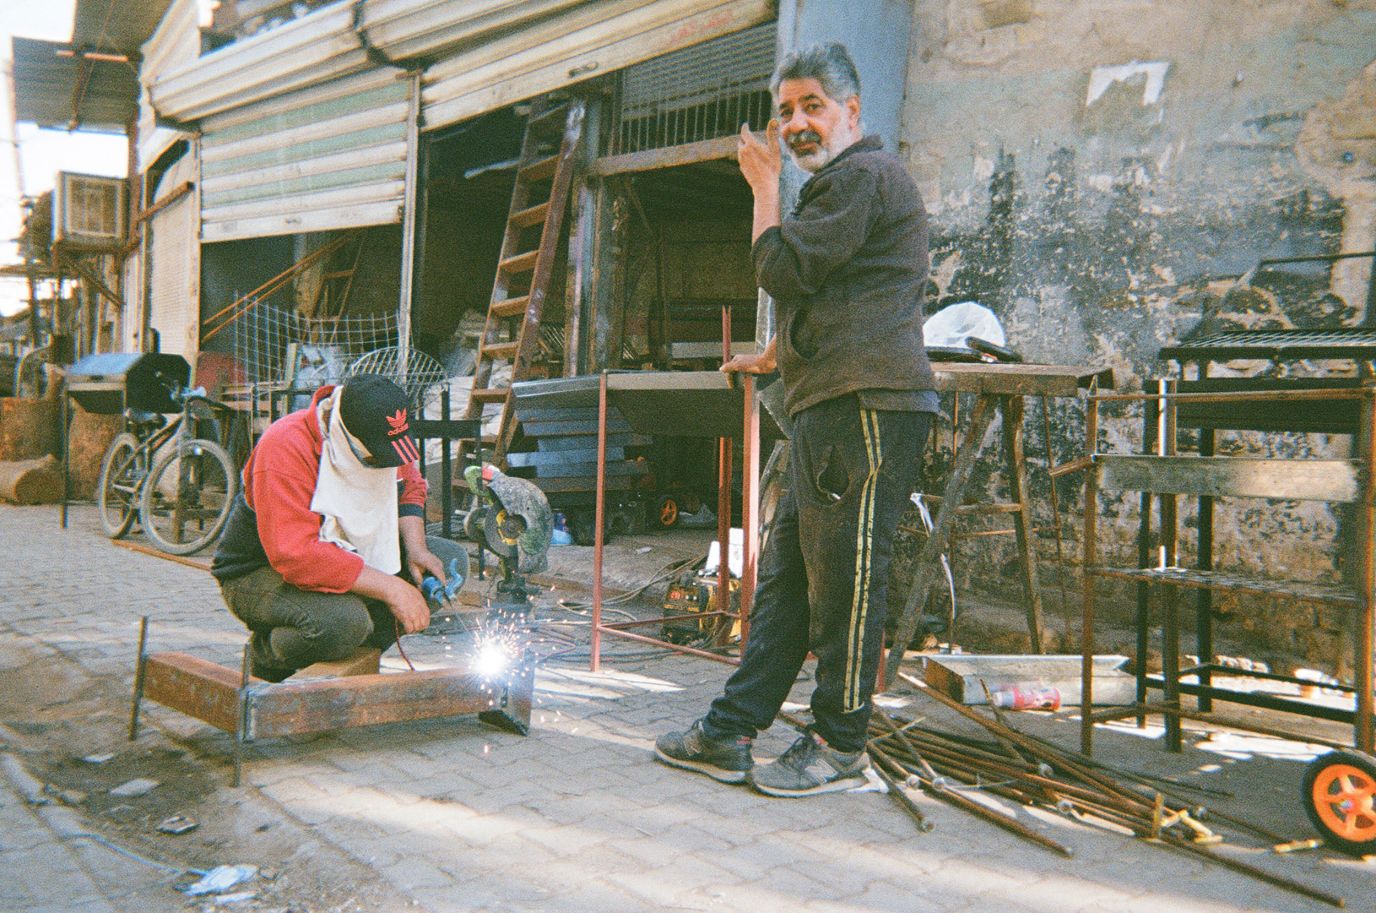 عراقيون يرسمون بكاميراتهم صورا عن رؤيتهم لبلدهم (صور)